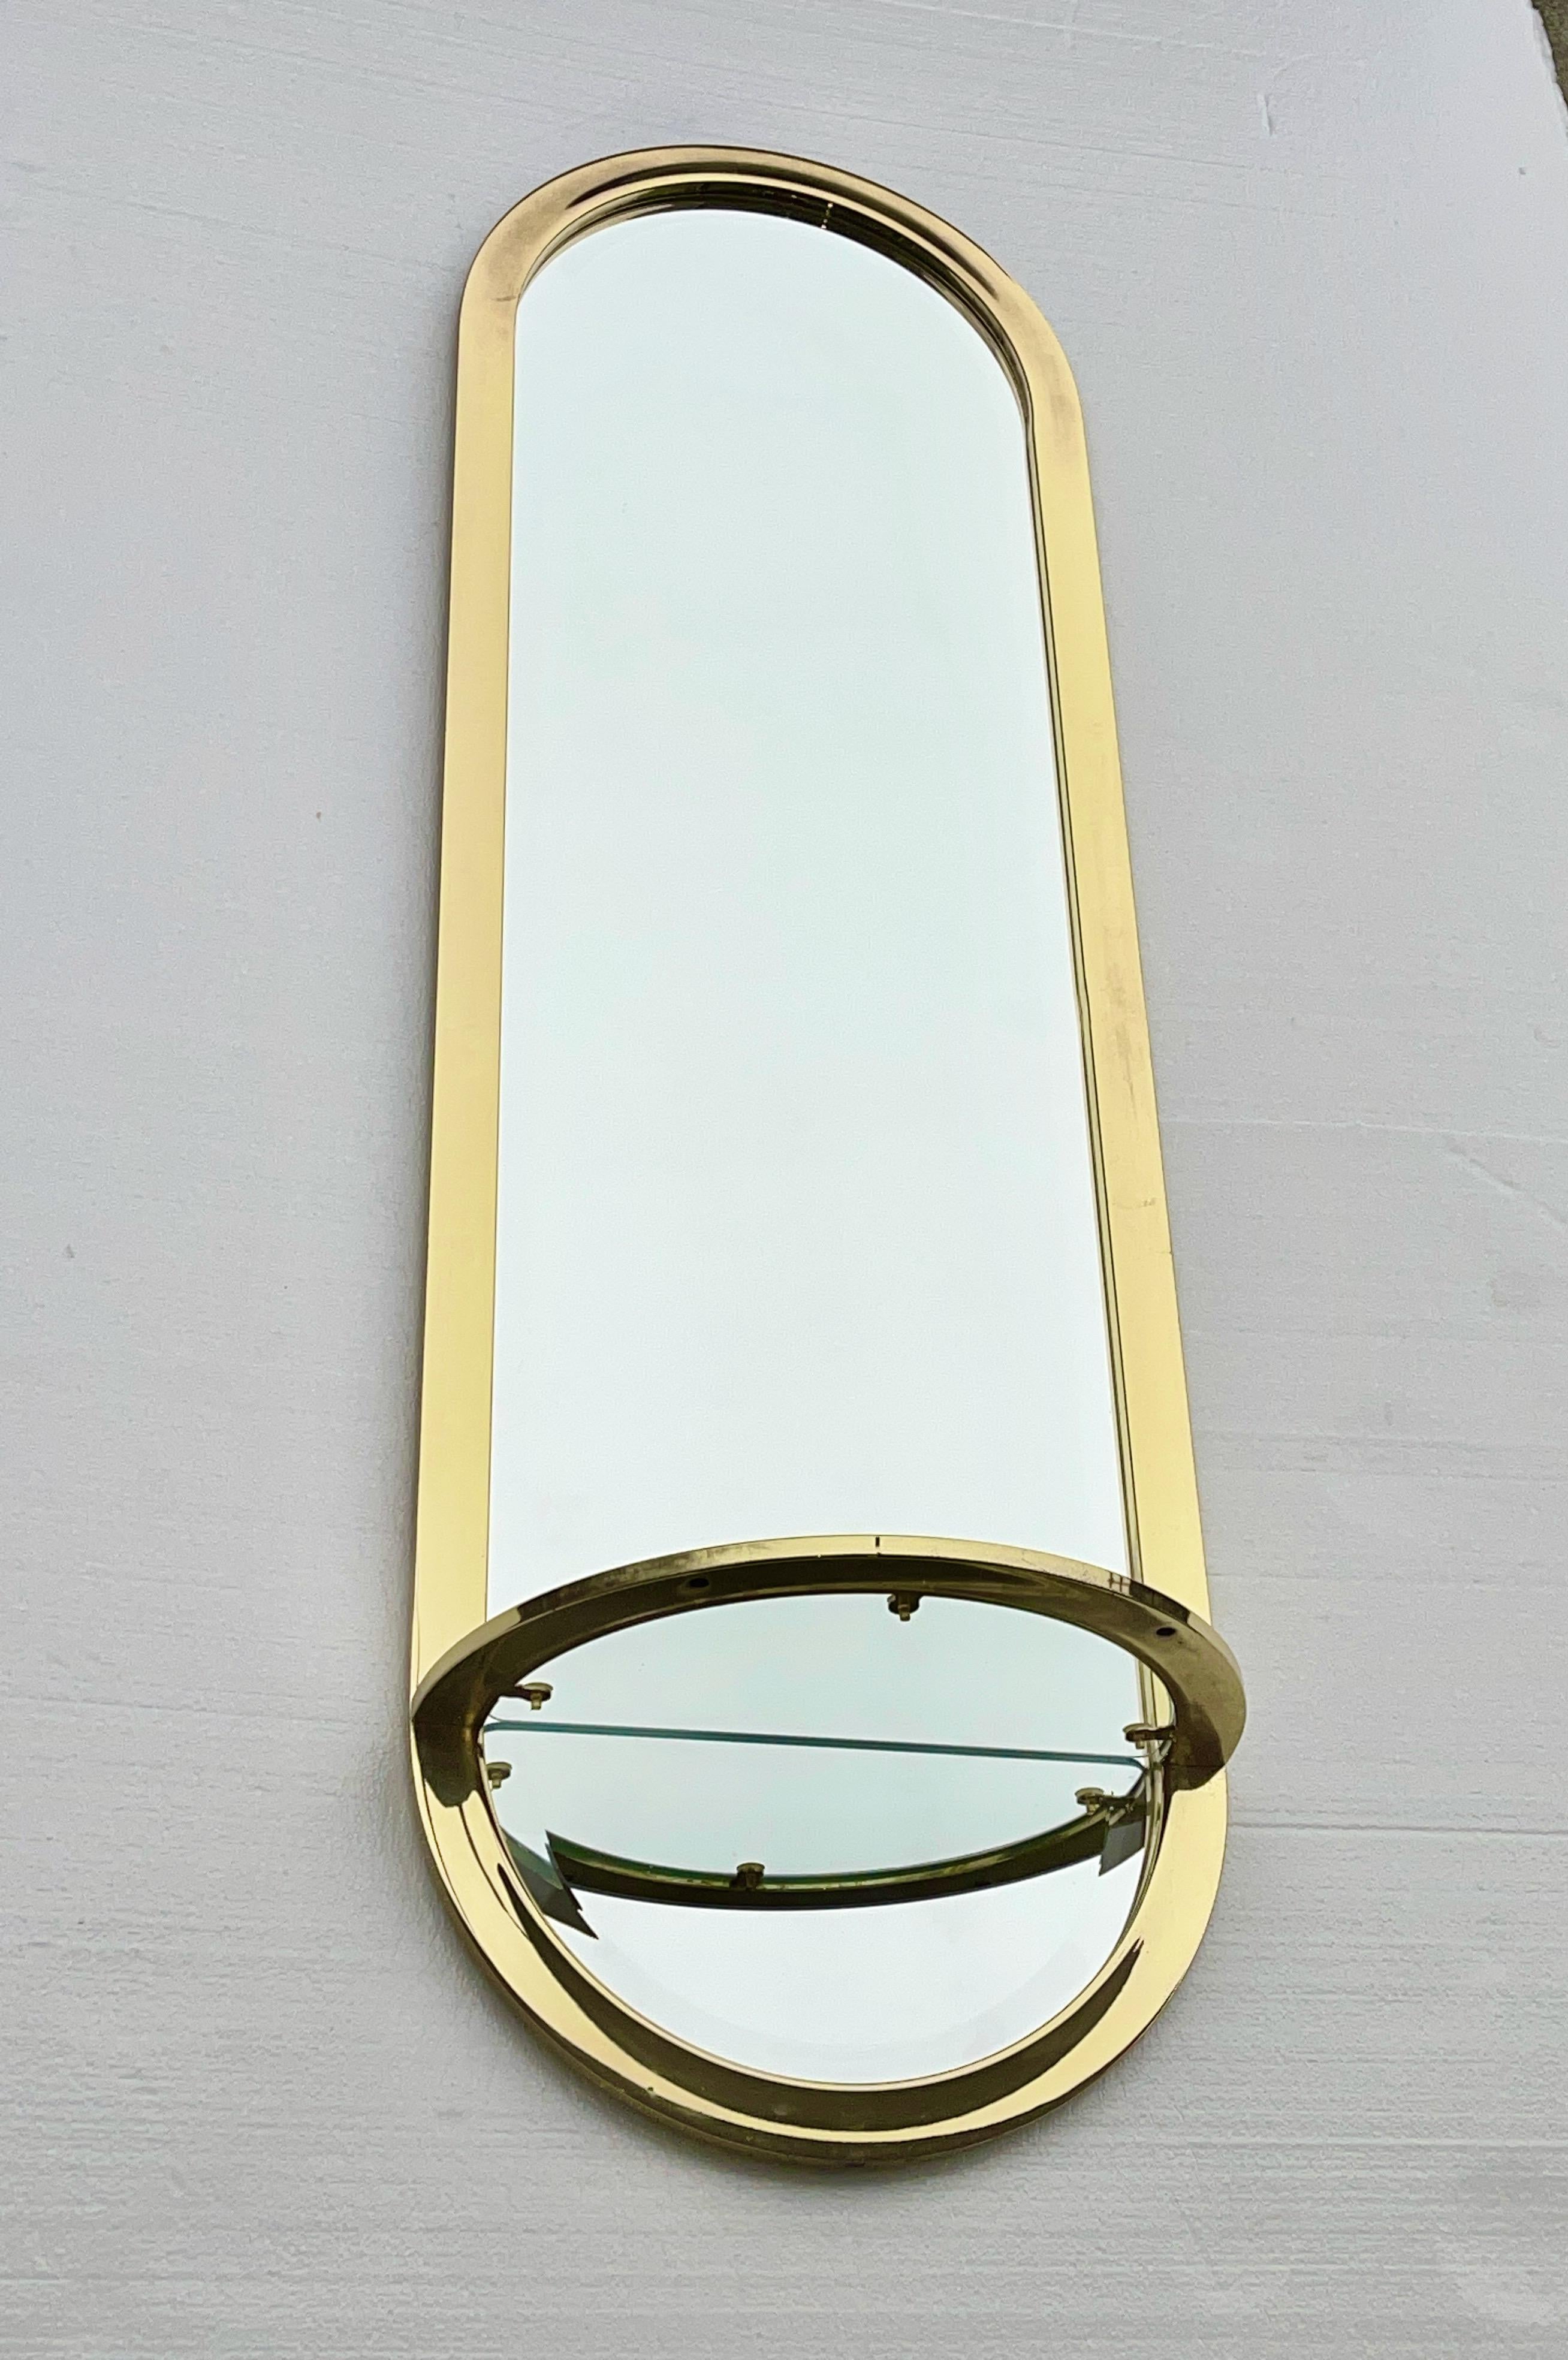 DIA Design Institute America Brass Racetrack Oval Mirror with Demilune Shelf For Sale 5